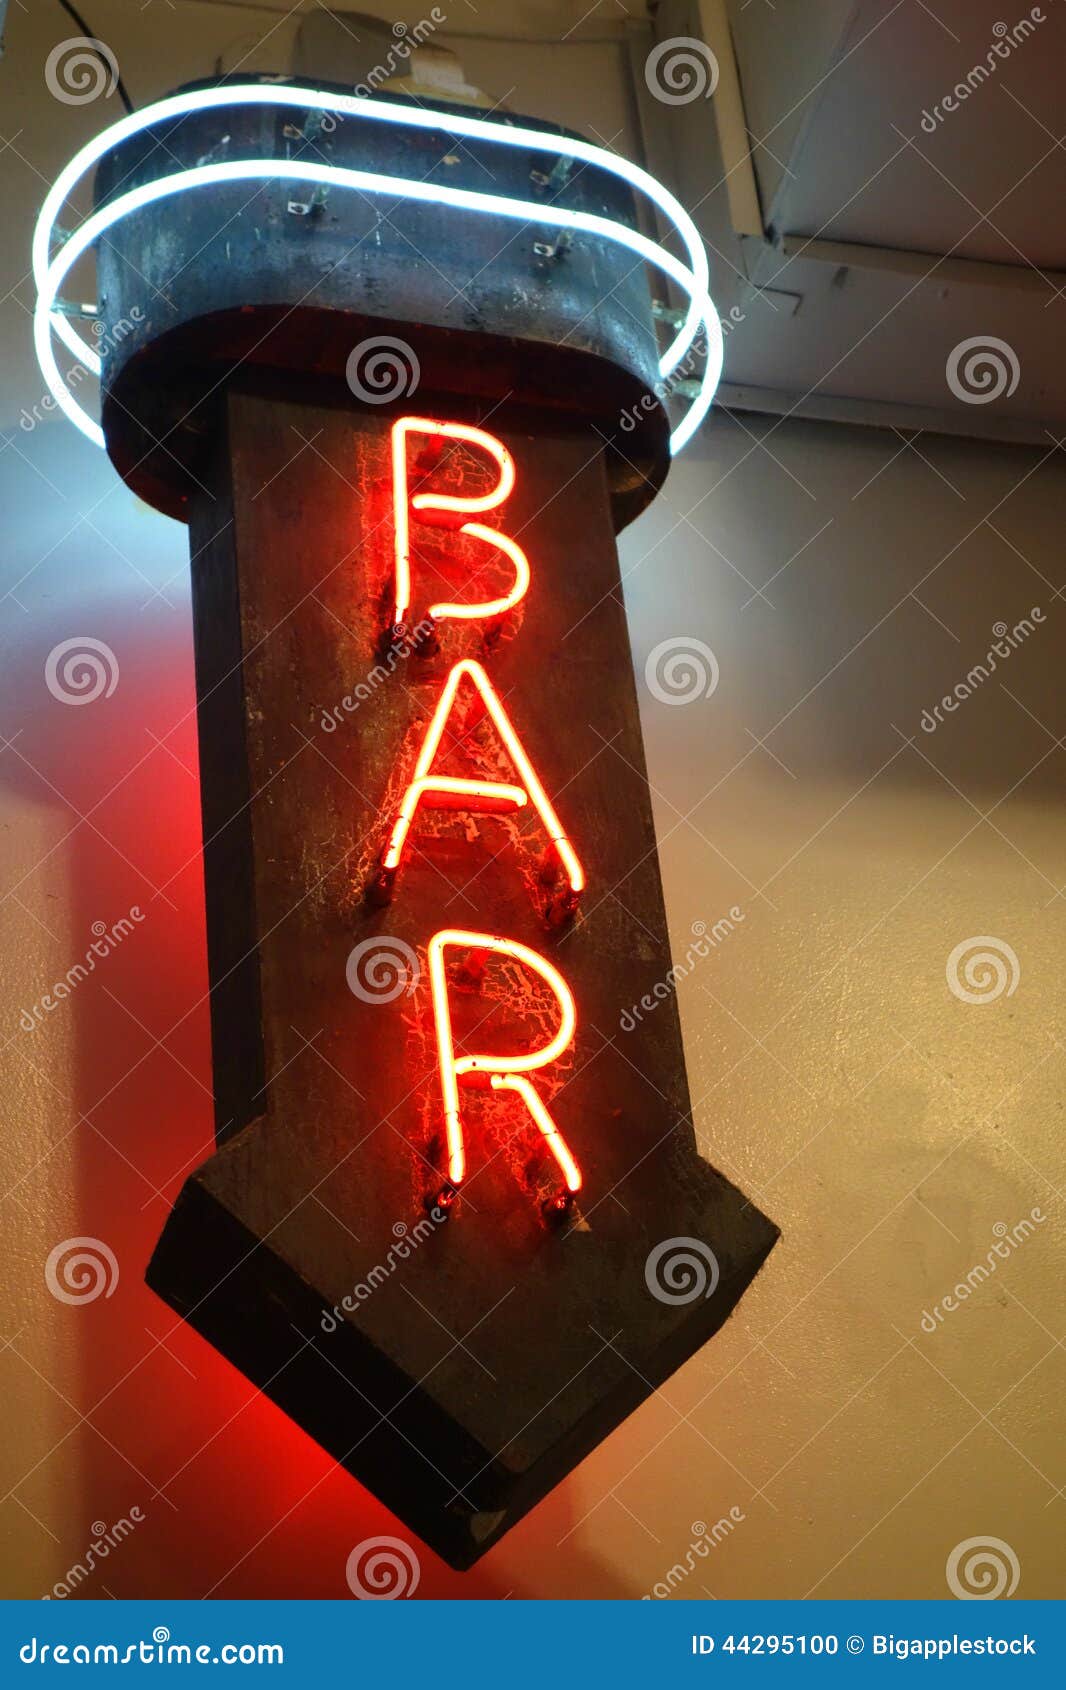 Bar Neon Sign Stock Photo-Image: 44295100